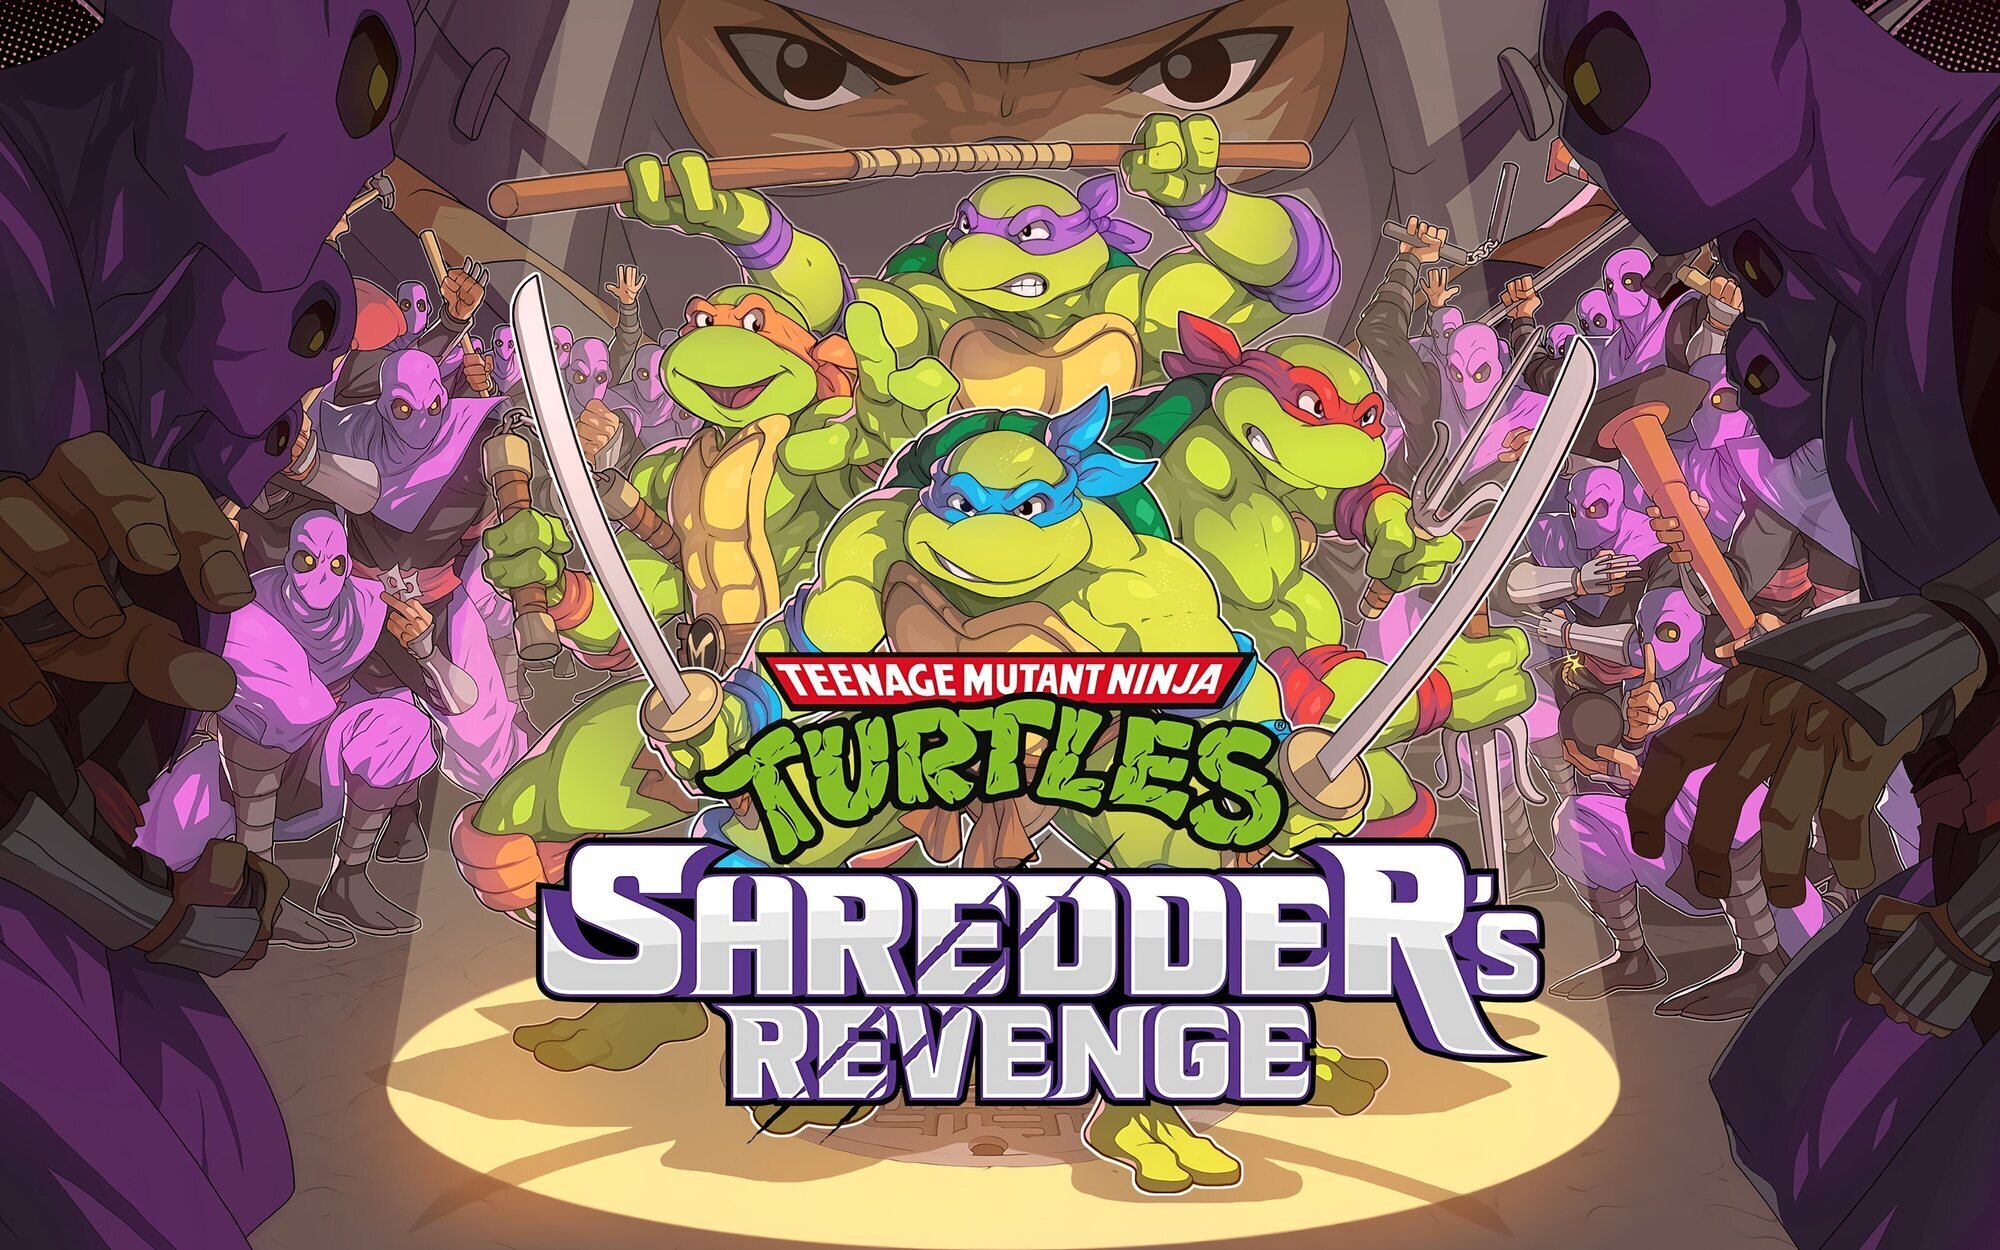 Análisis de 'Teenage Mutant Ninja Turtles: Shredder's Revenge' para PS4, de fruta madre